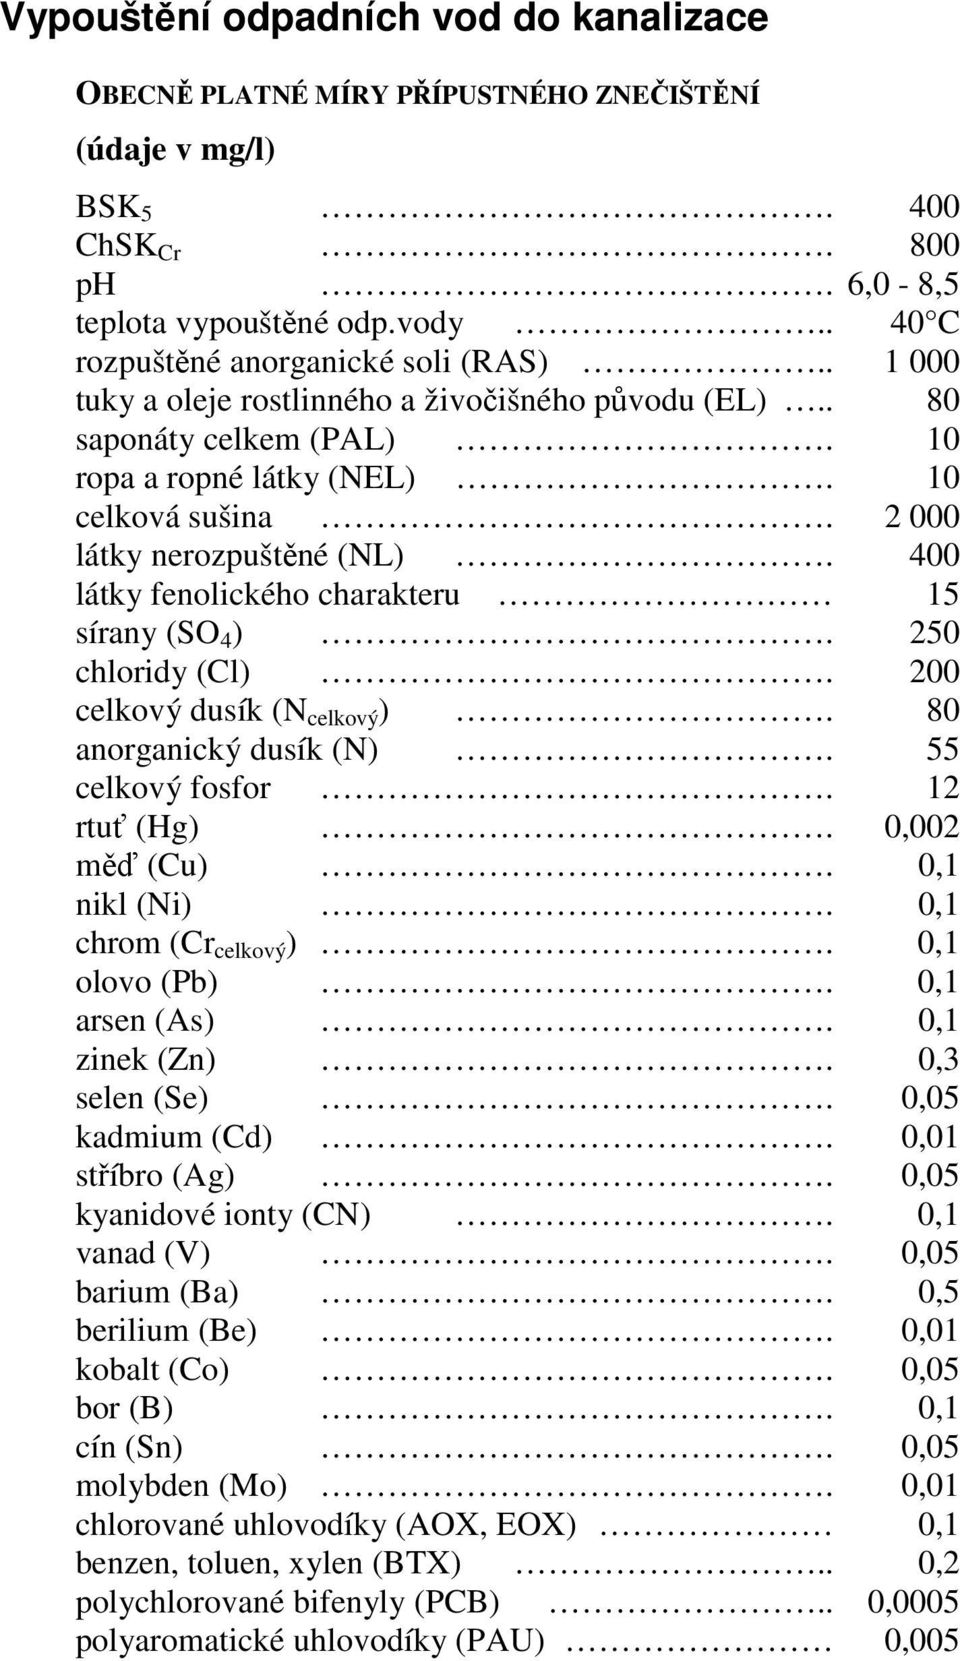 400 látky fenolického charakteru 15 sírany (SO 4 ). 250 chloridy (Cl). 200 celkový dusík (N celkový ). 80 anorganický dusík (N). 55 celkový fosfor. 12 rtuť (Hg). 0,002 měď (Cu). 0,1 nikl (Ni).